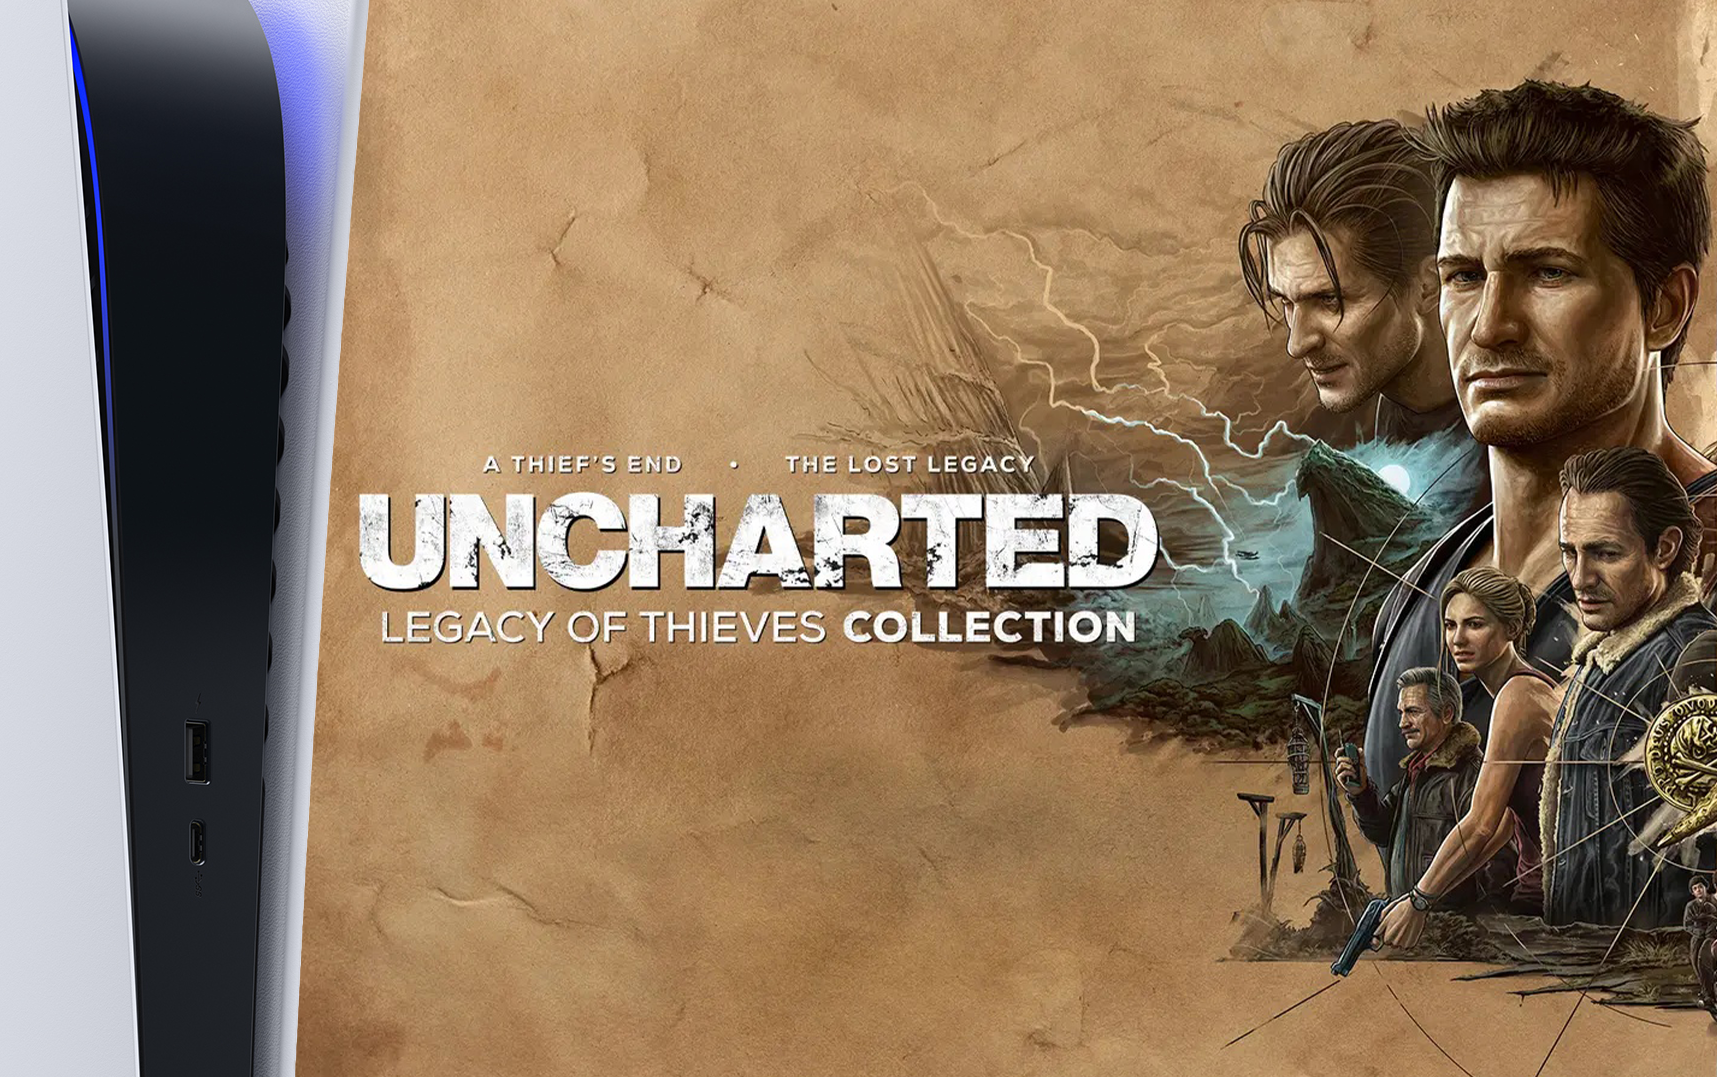 Legacy of thieves collection купить. Uncharted™: наследие воров. Коллекция. Uncharted 4 наследие воров. Игра Uncharted наследие воров. Uncharted 4 Legacy of Thieves collection.